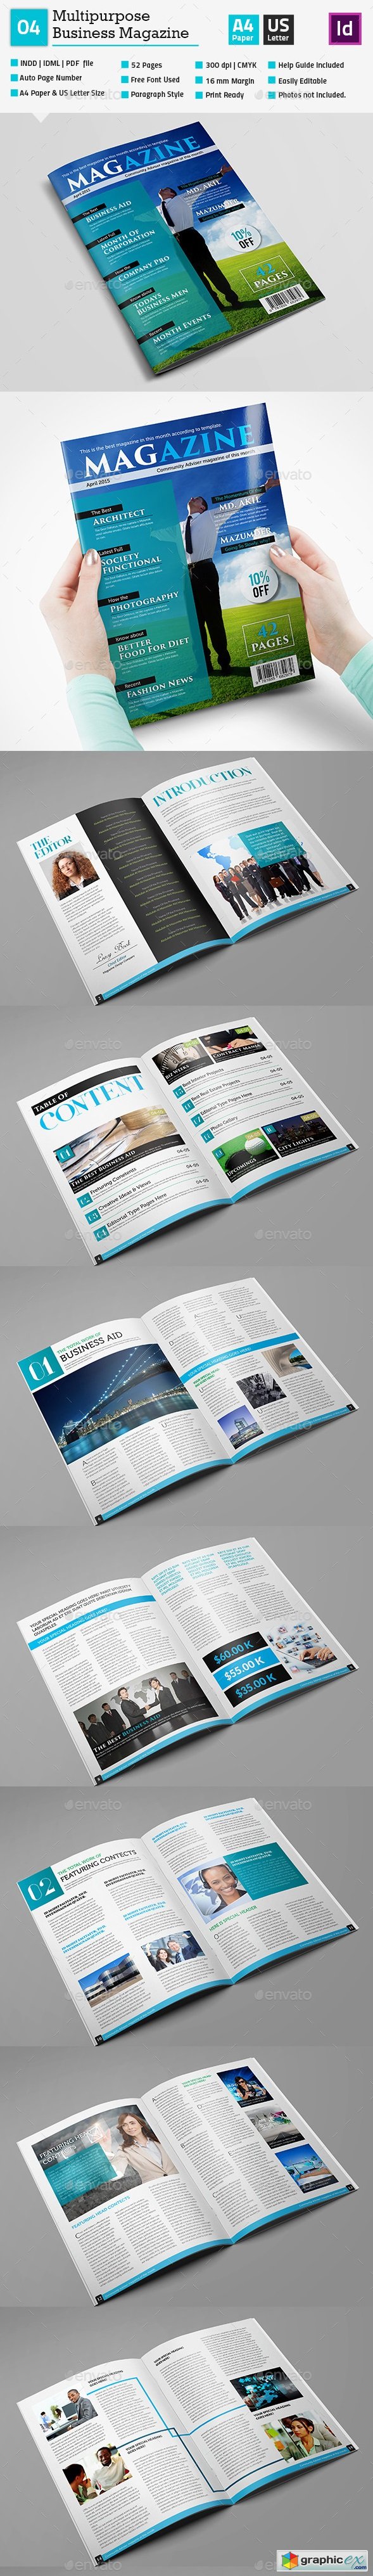 Multipurpose Magazine Template_Indesign 52 Page_V4